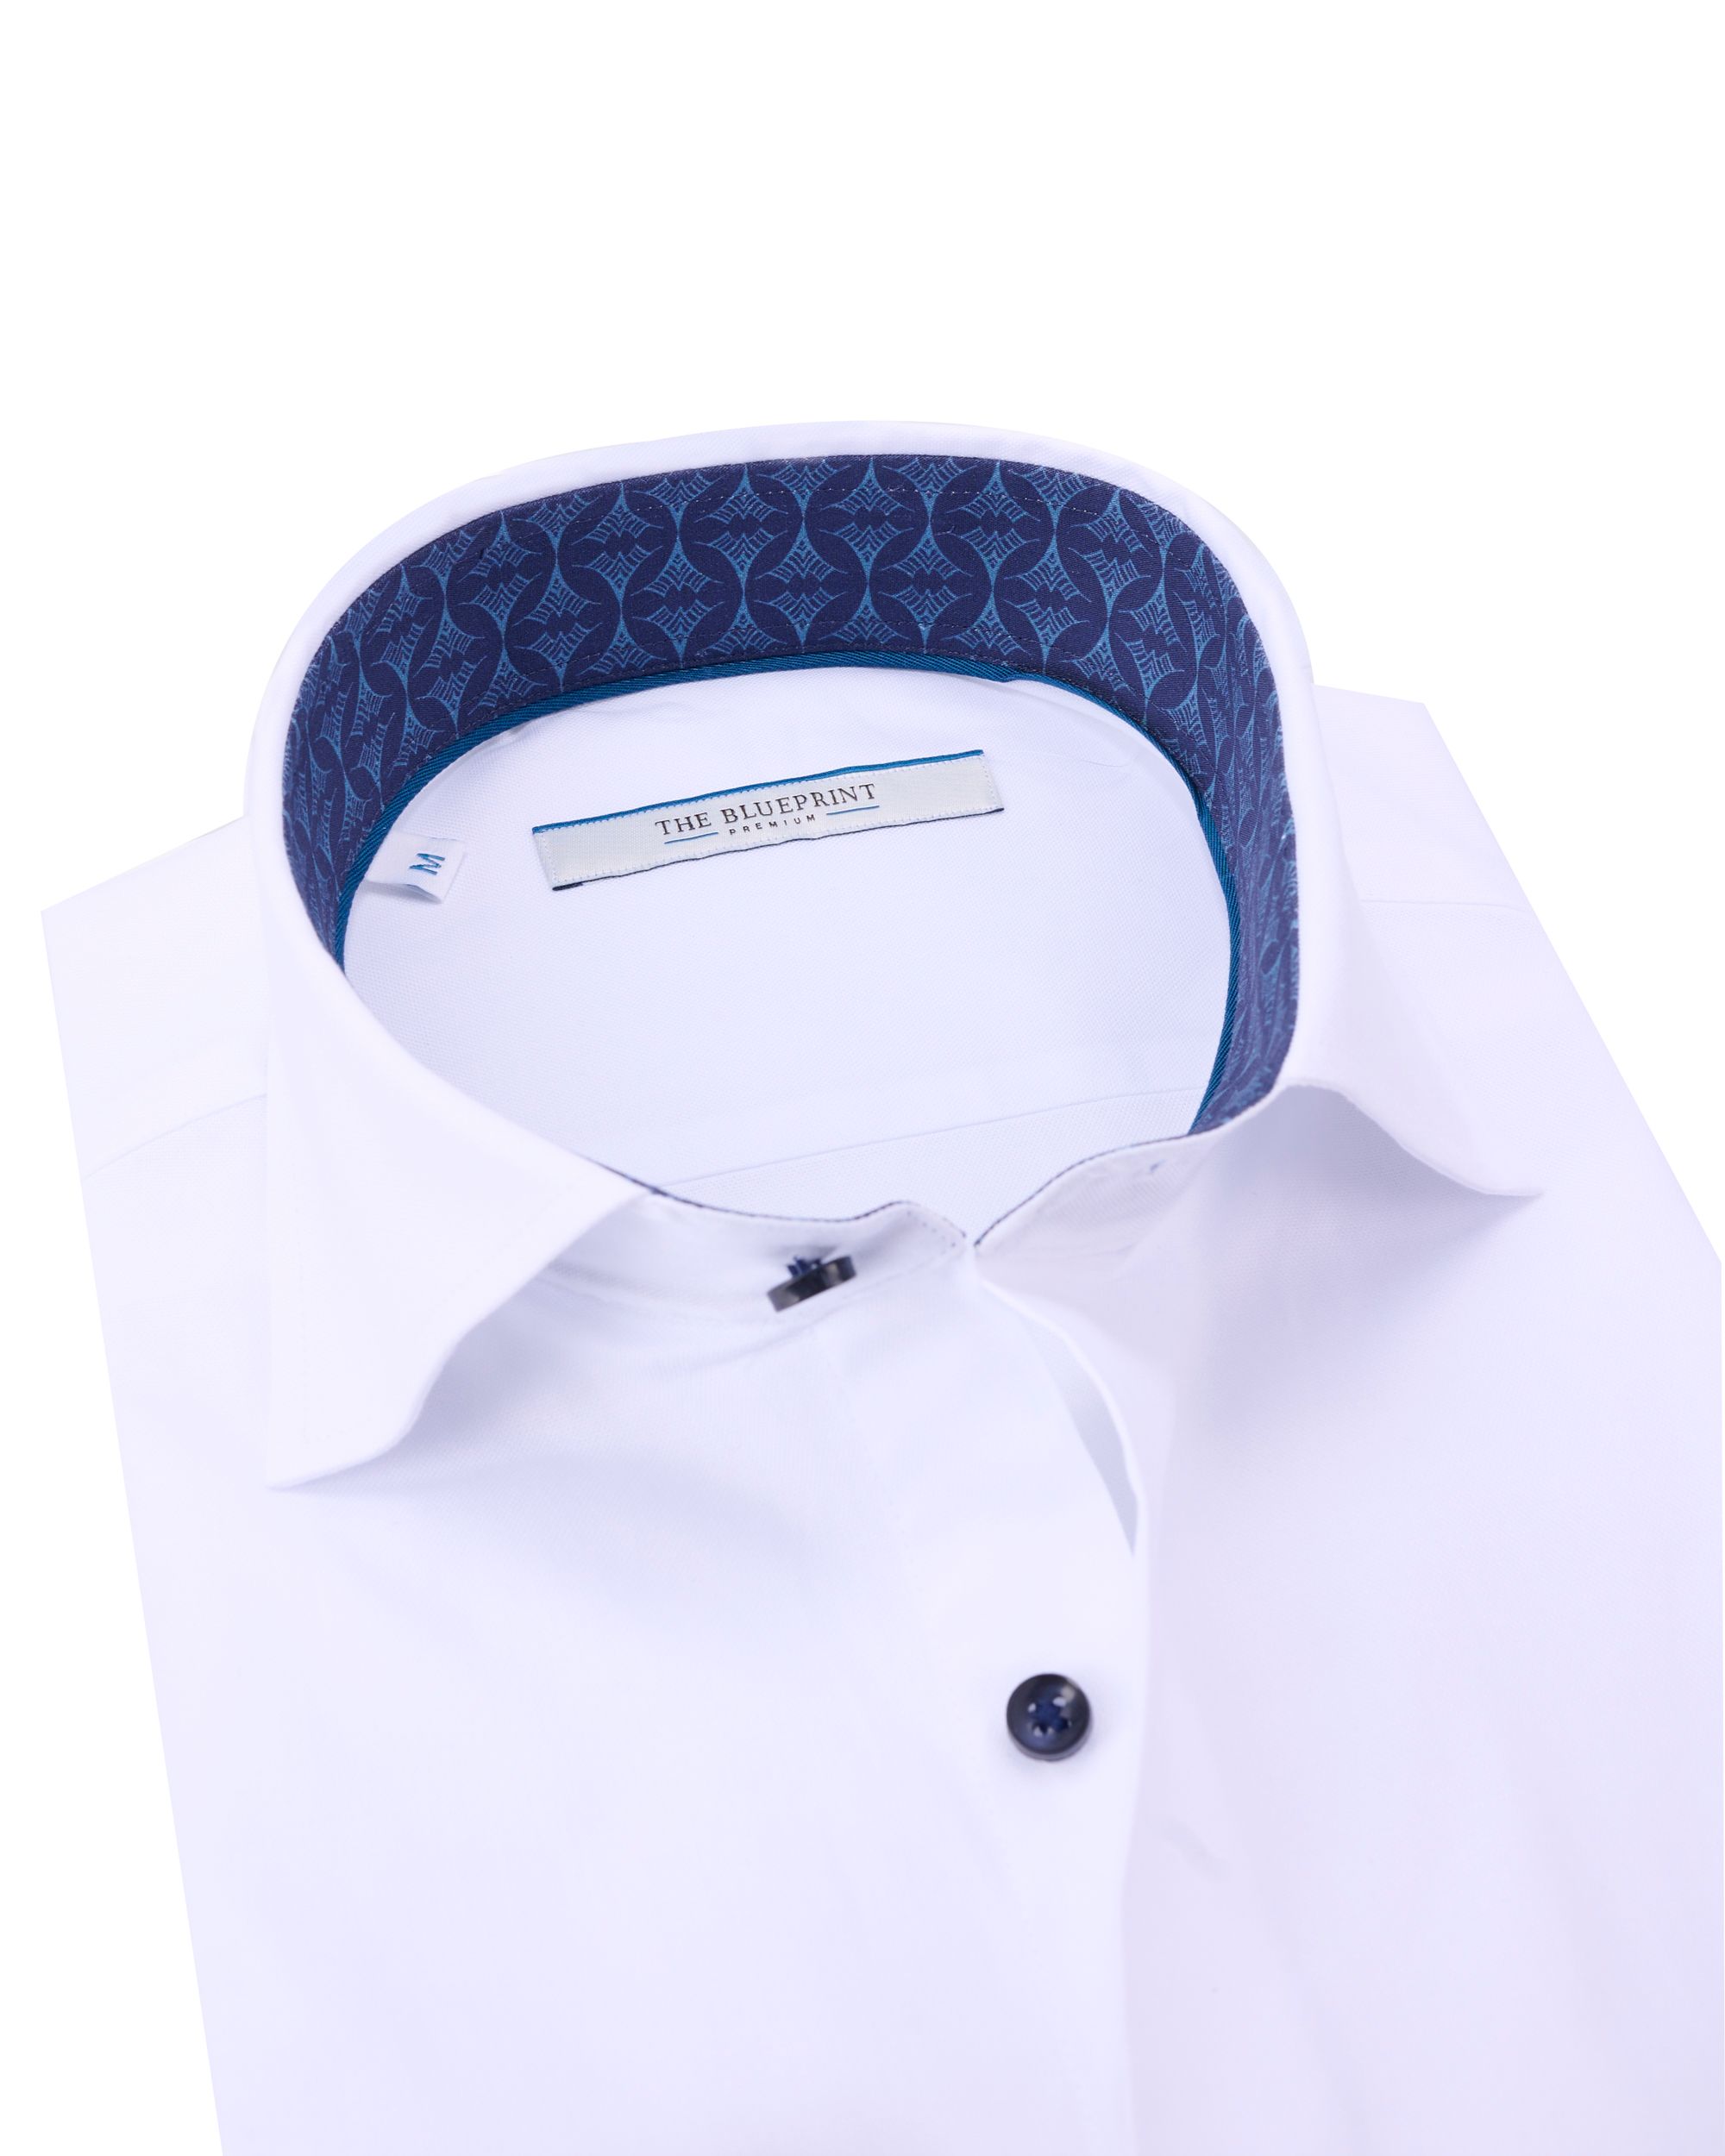 The BLUEPRINT Premium - Trendy overhemd LM WHITE 086653-001-L